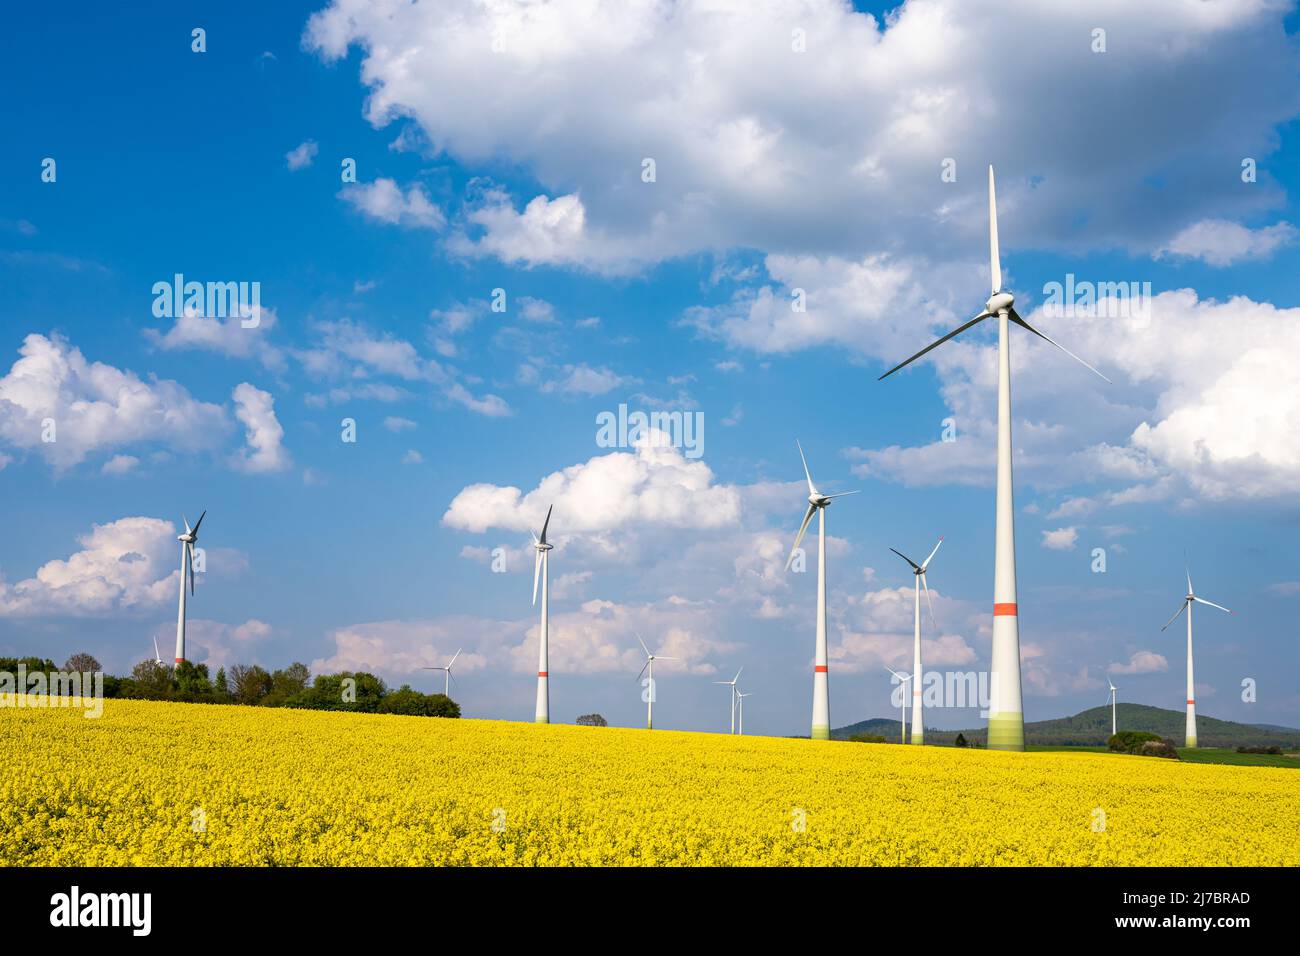 Wind turbines in a flowering canola field seen in Germany Stock Photo